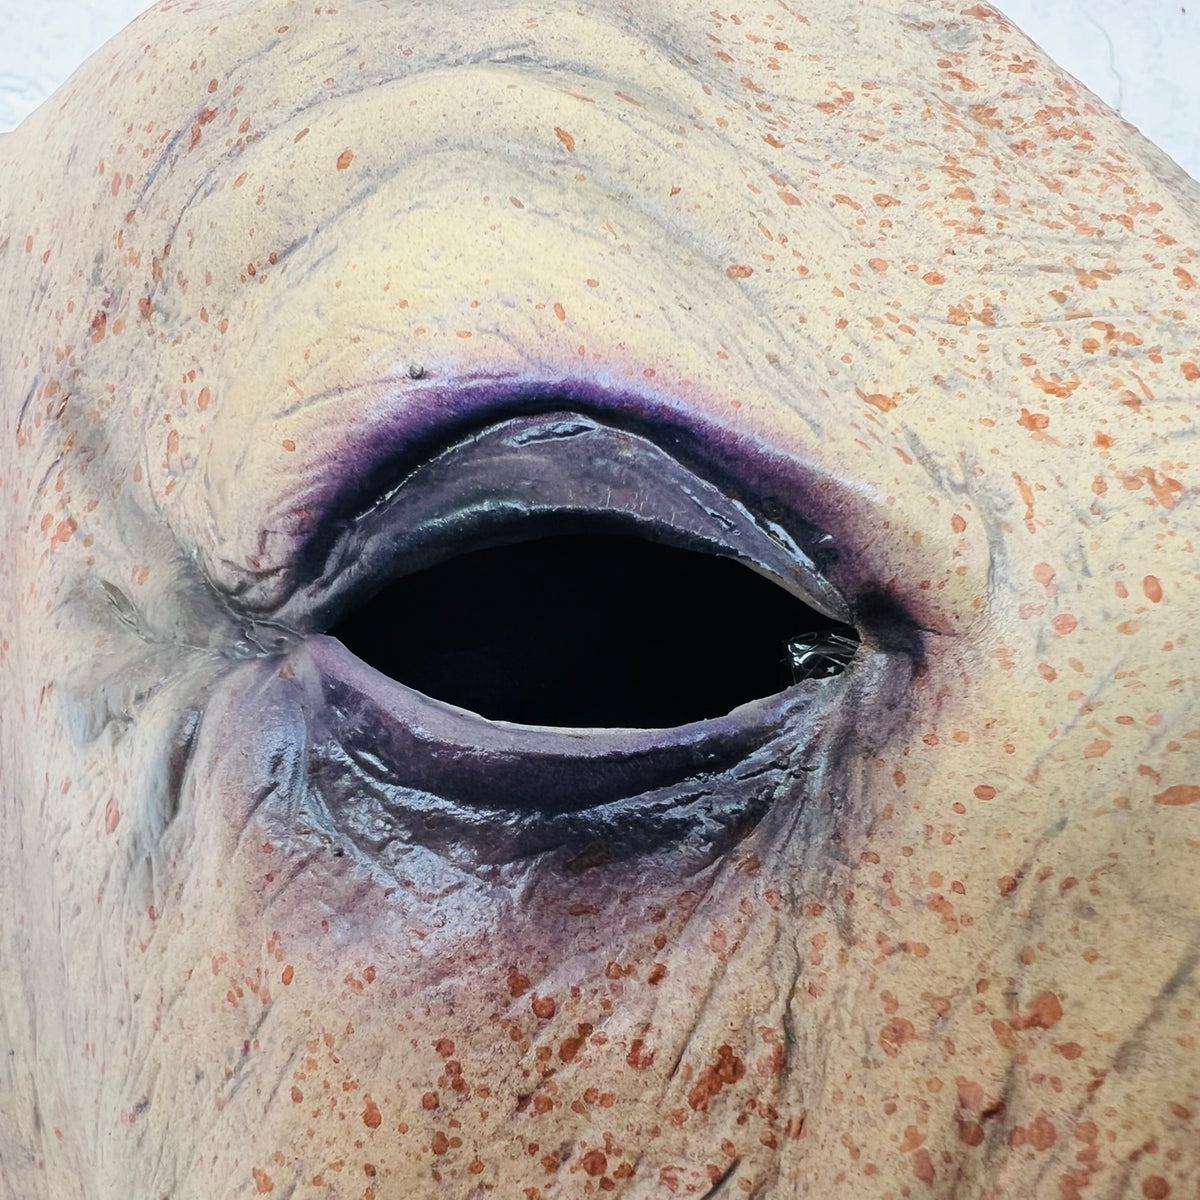 Severed Pig Head Mask